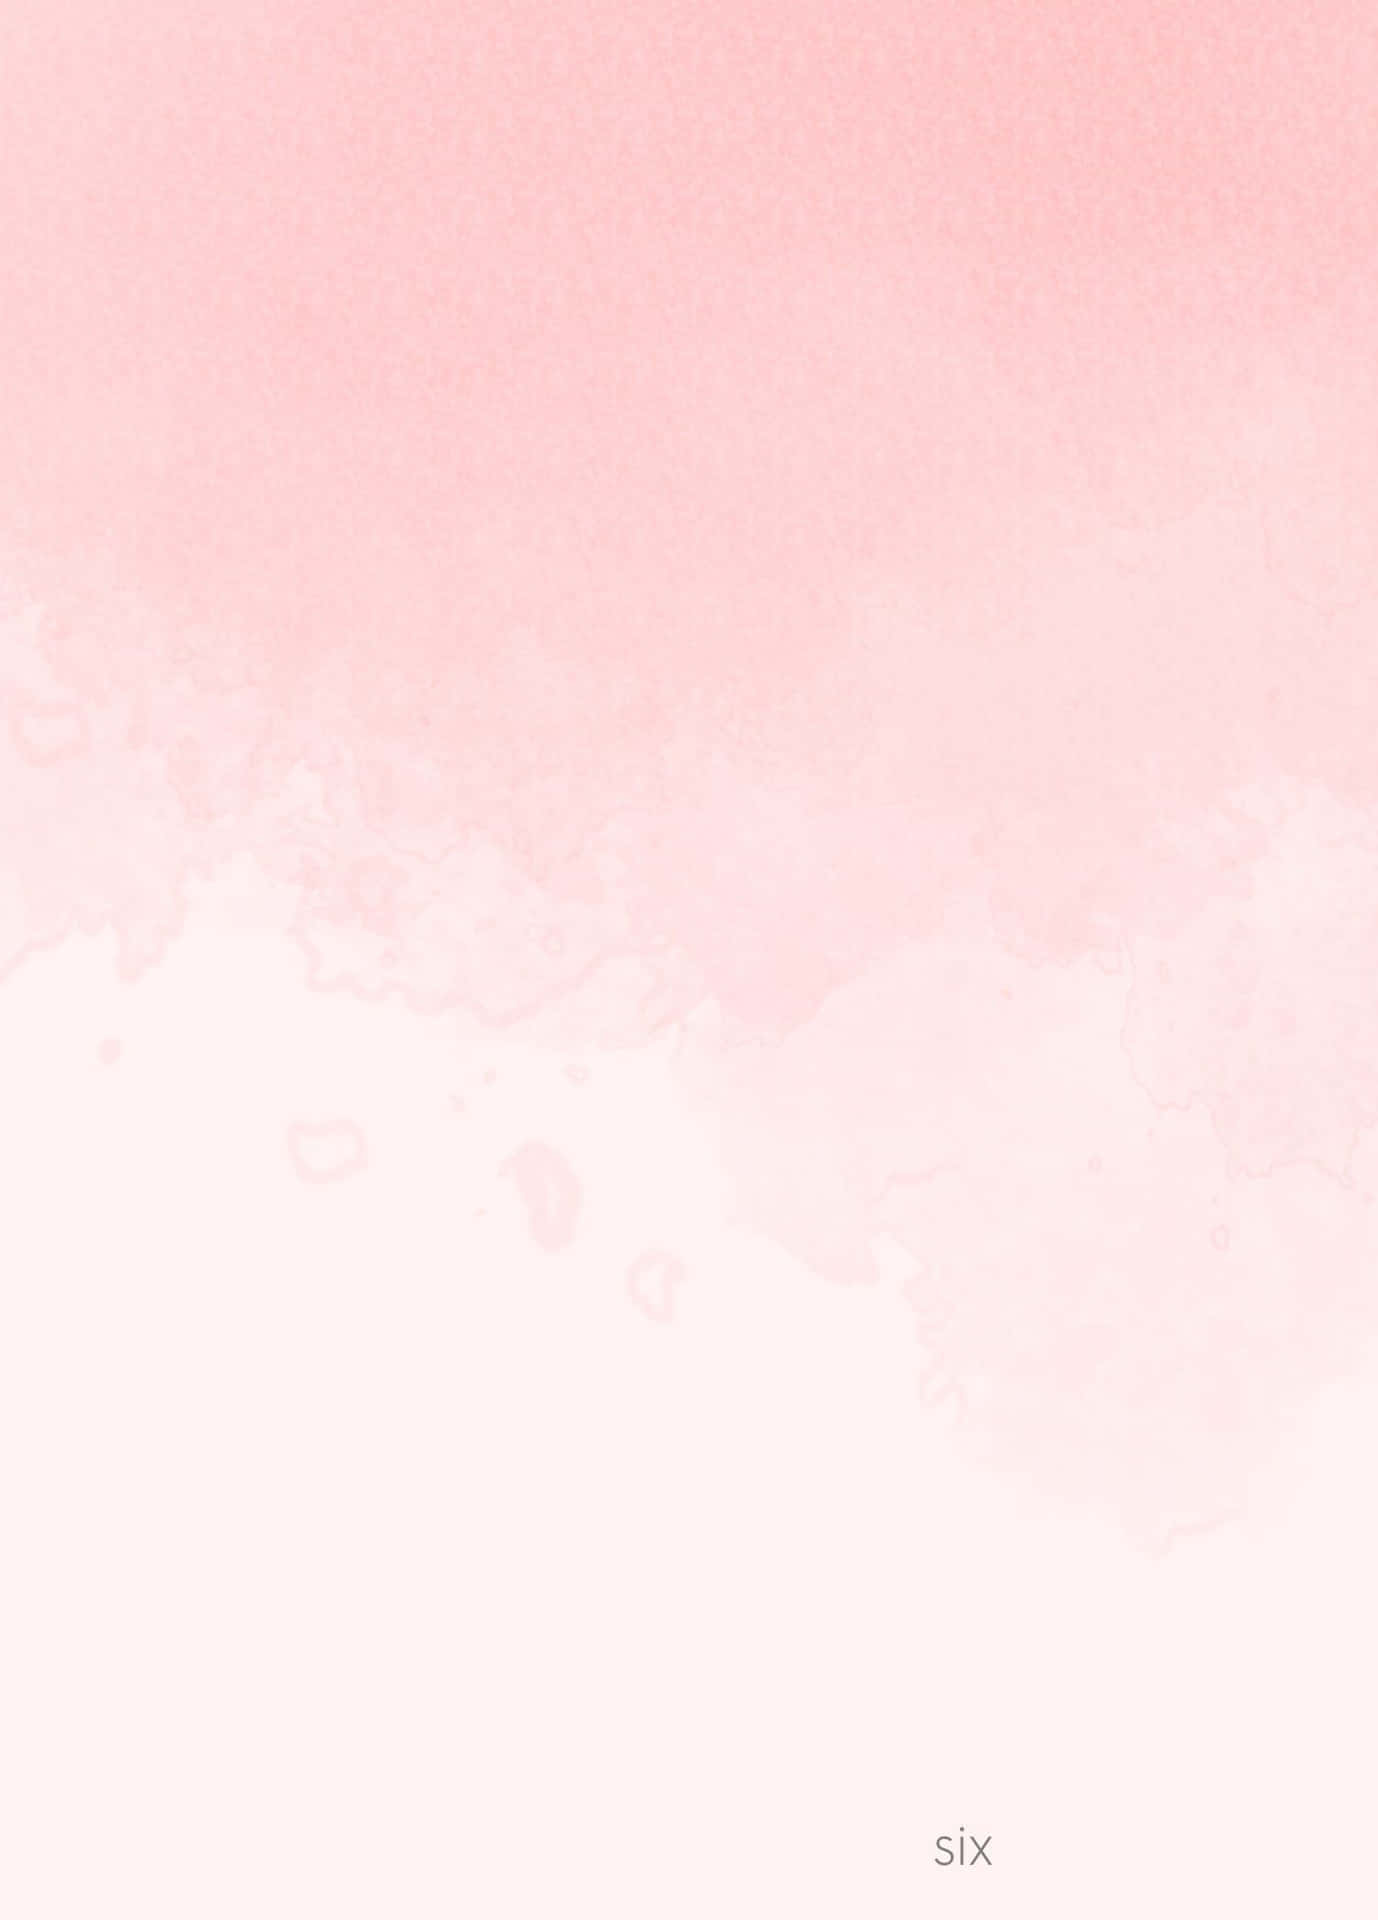 Einatemberaubendes Pinkfarbenes Aquarellgemälde. Wallpaper